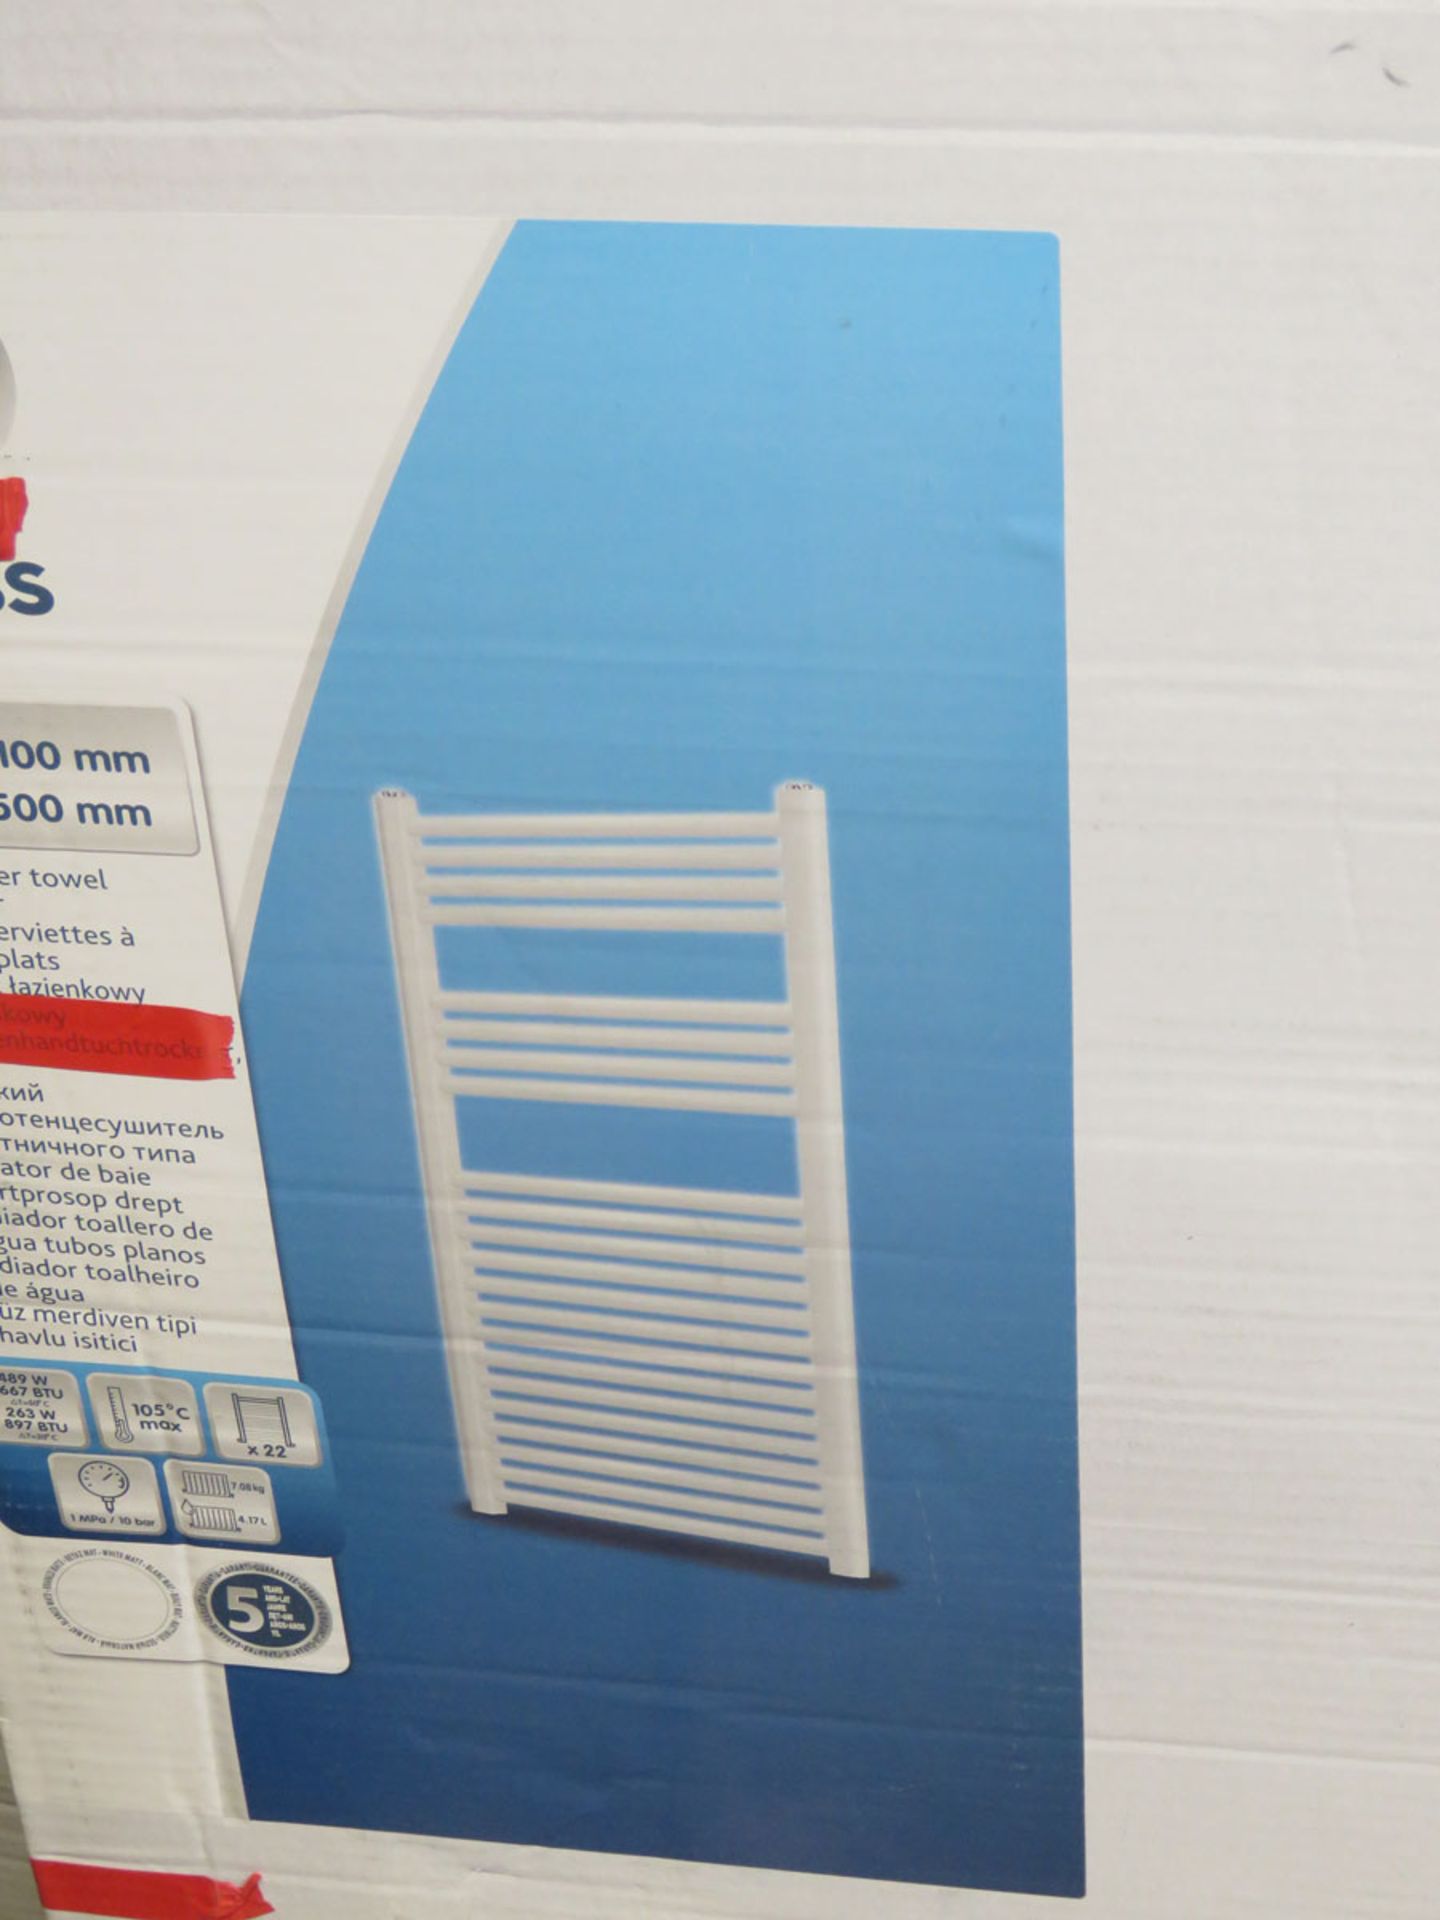 1100mm x 500mm white towel radiator - Image 2 of 2